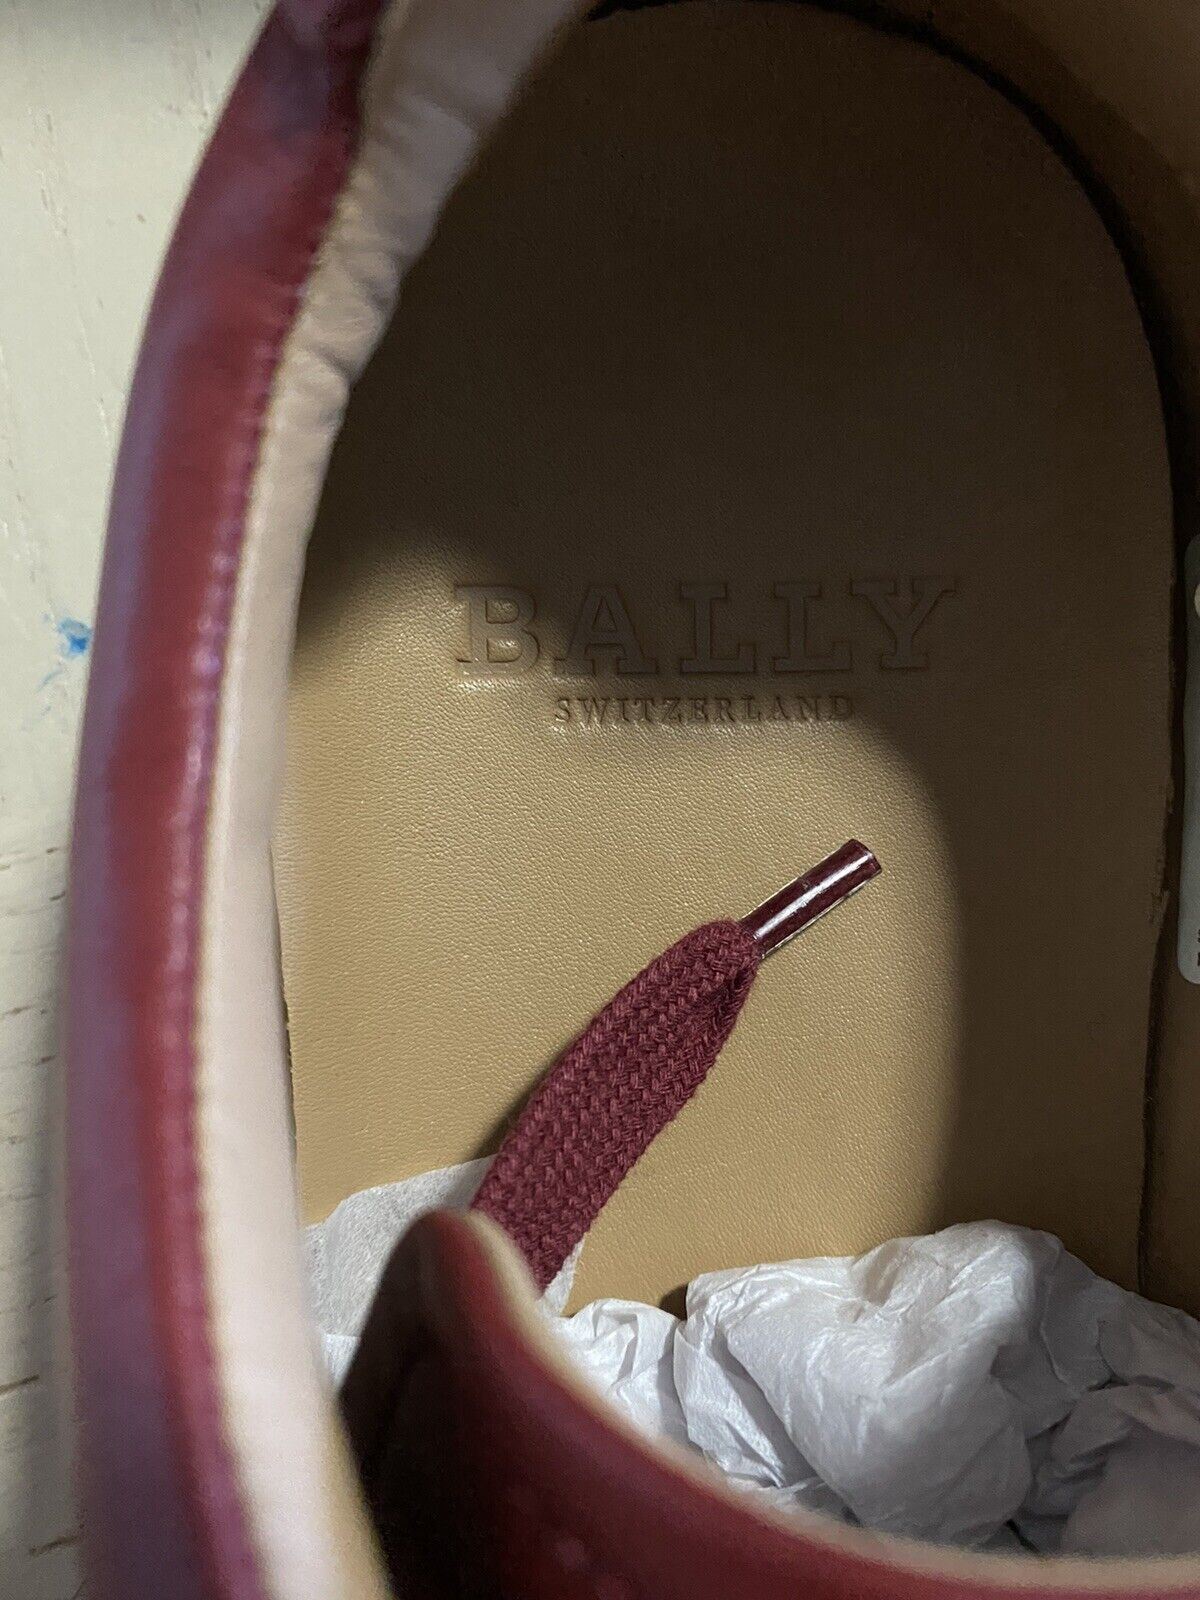 New $550 Bally Men Zibler Leather Sneakers Shoes Red 7 US Switzerland